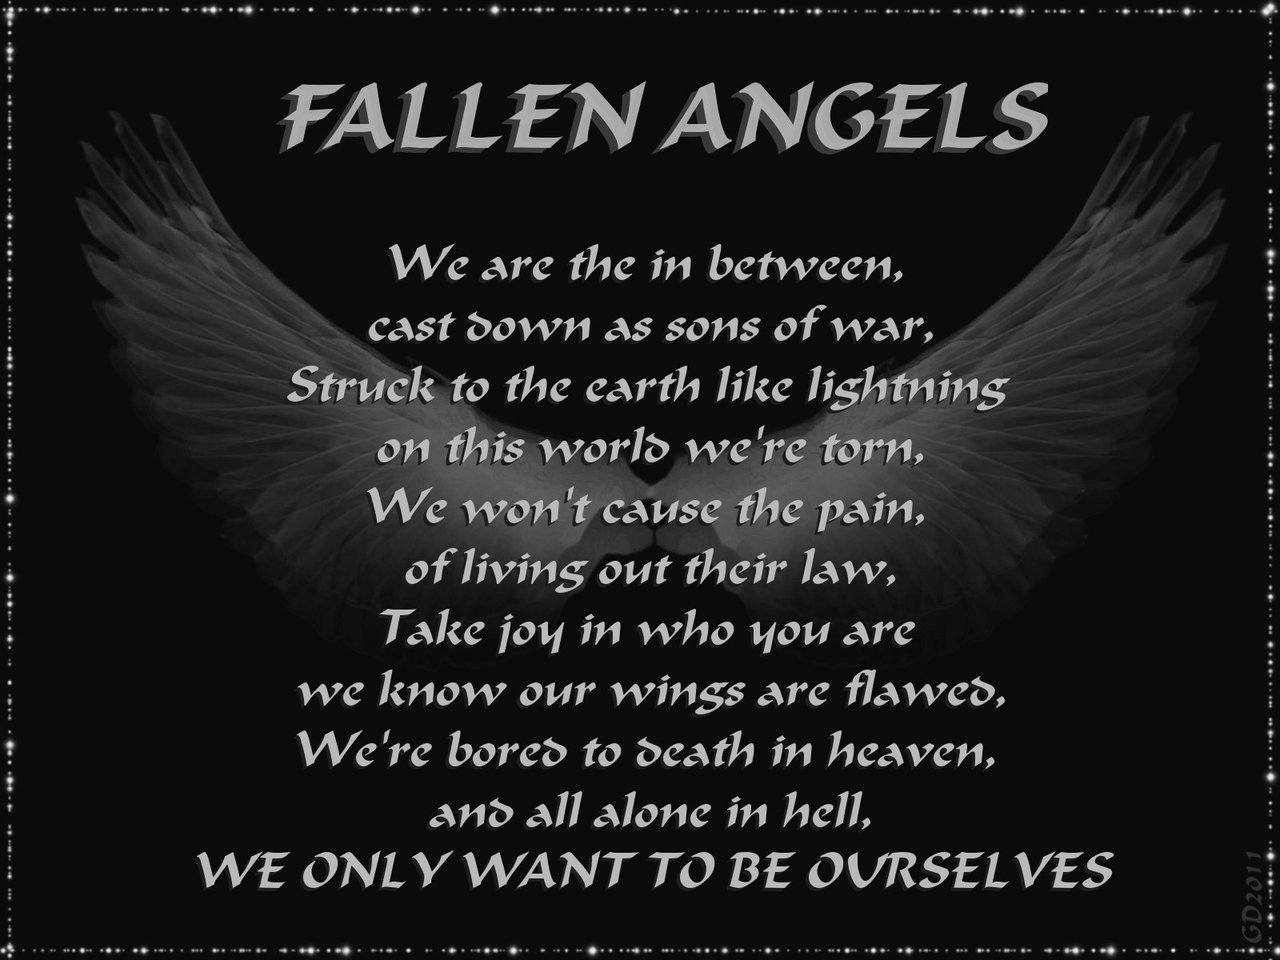 BVB Fallen Angels Lyrics by GD0578 on